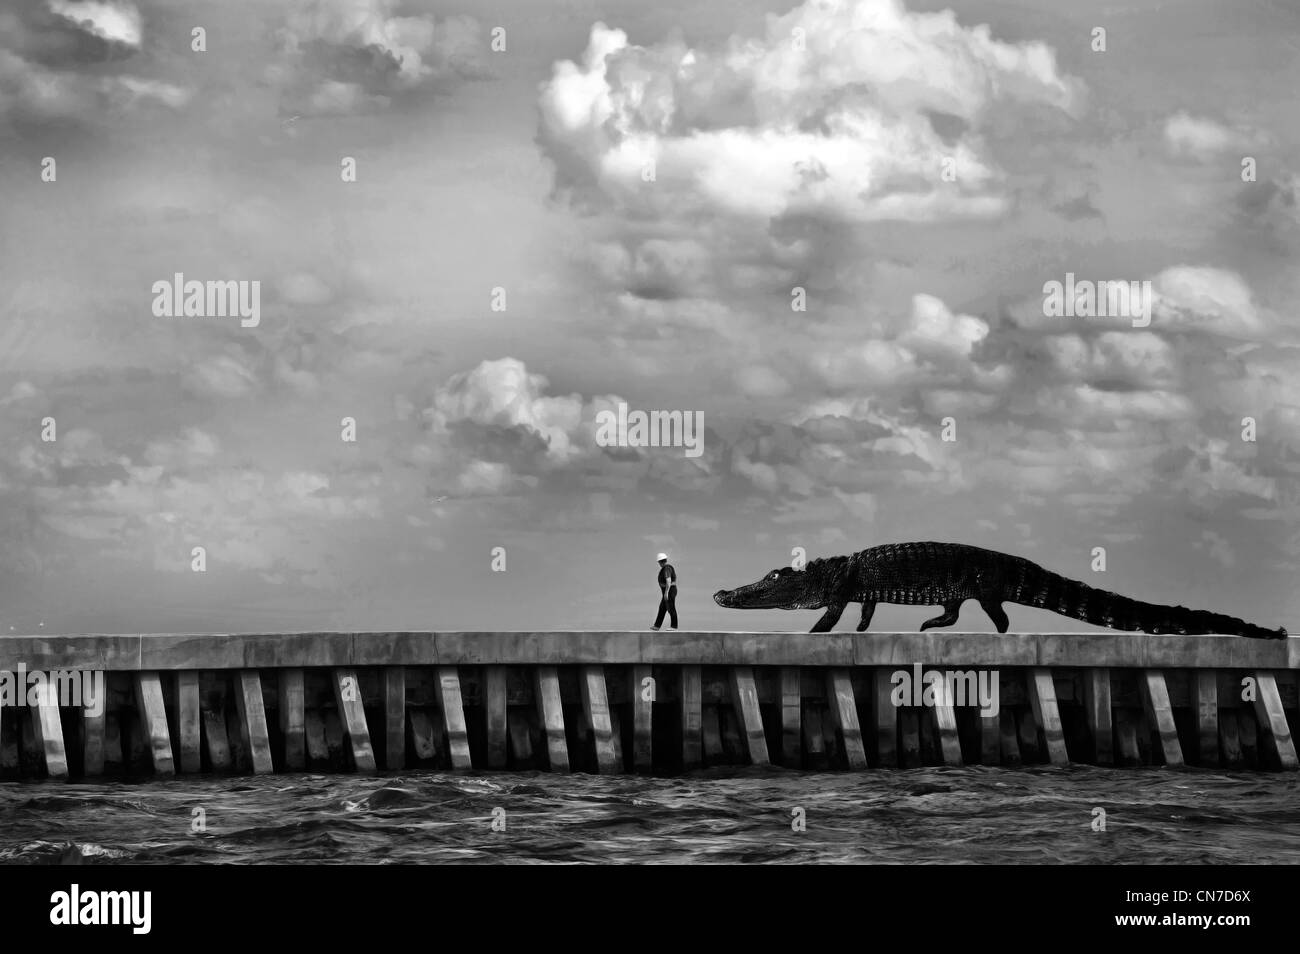 Giant alligator following man on pier Stock Photo